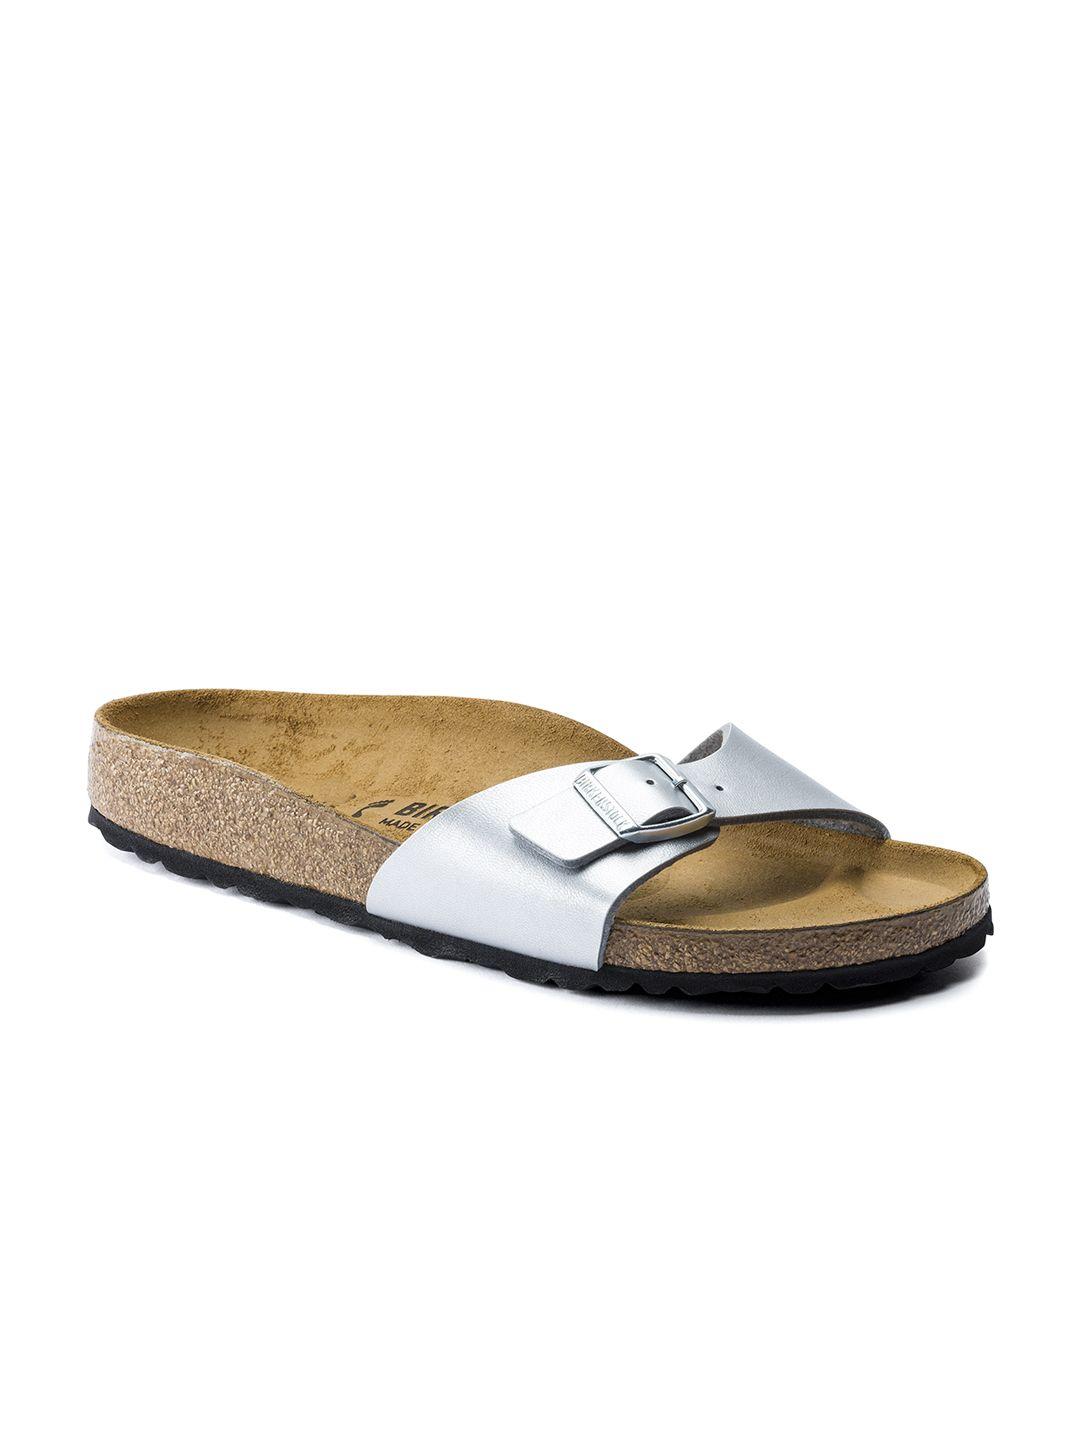 birkenstock unisex silver-toned madrid birko-flor narrow width sandals